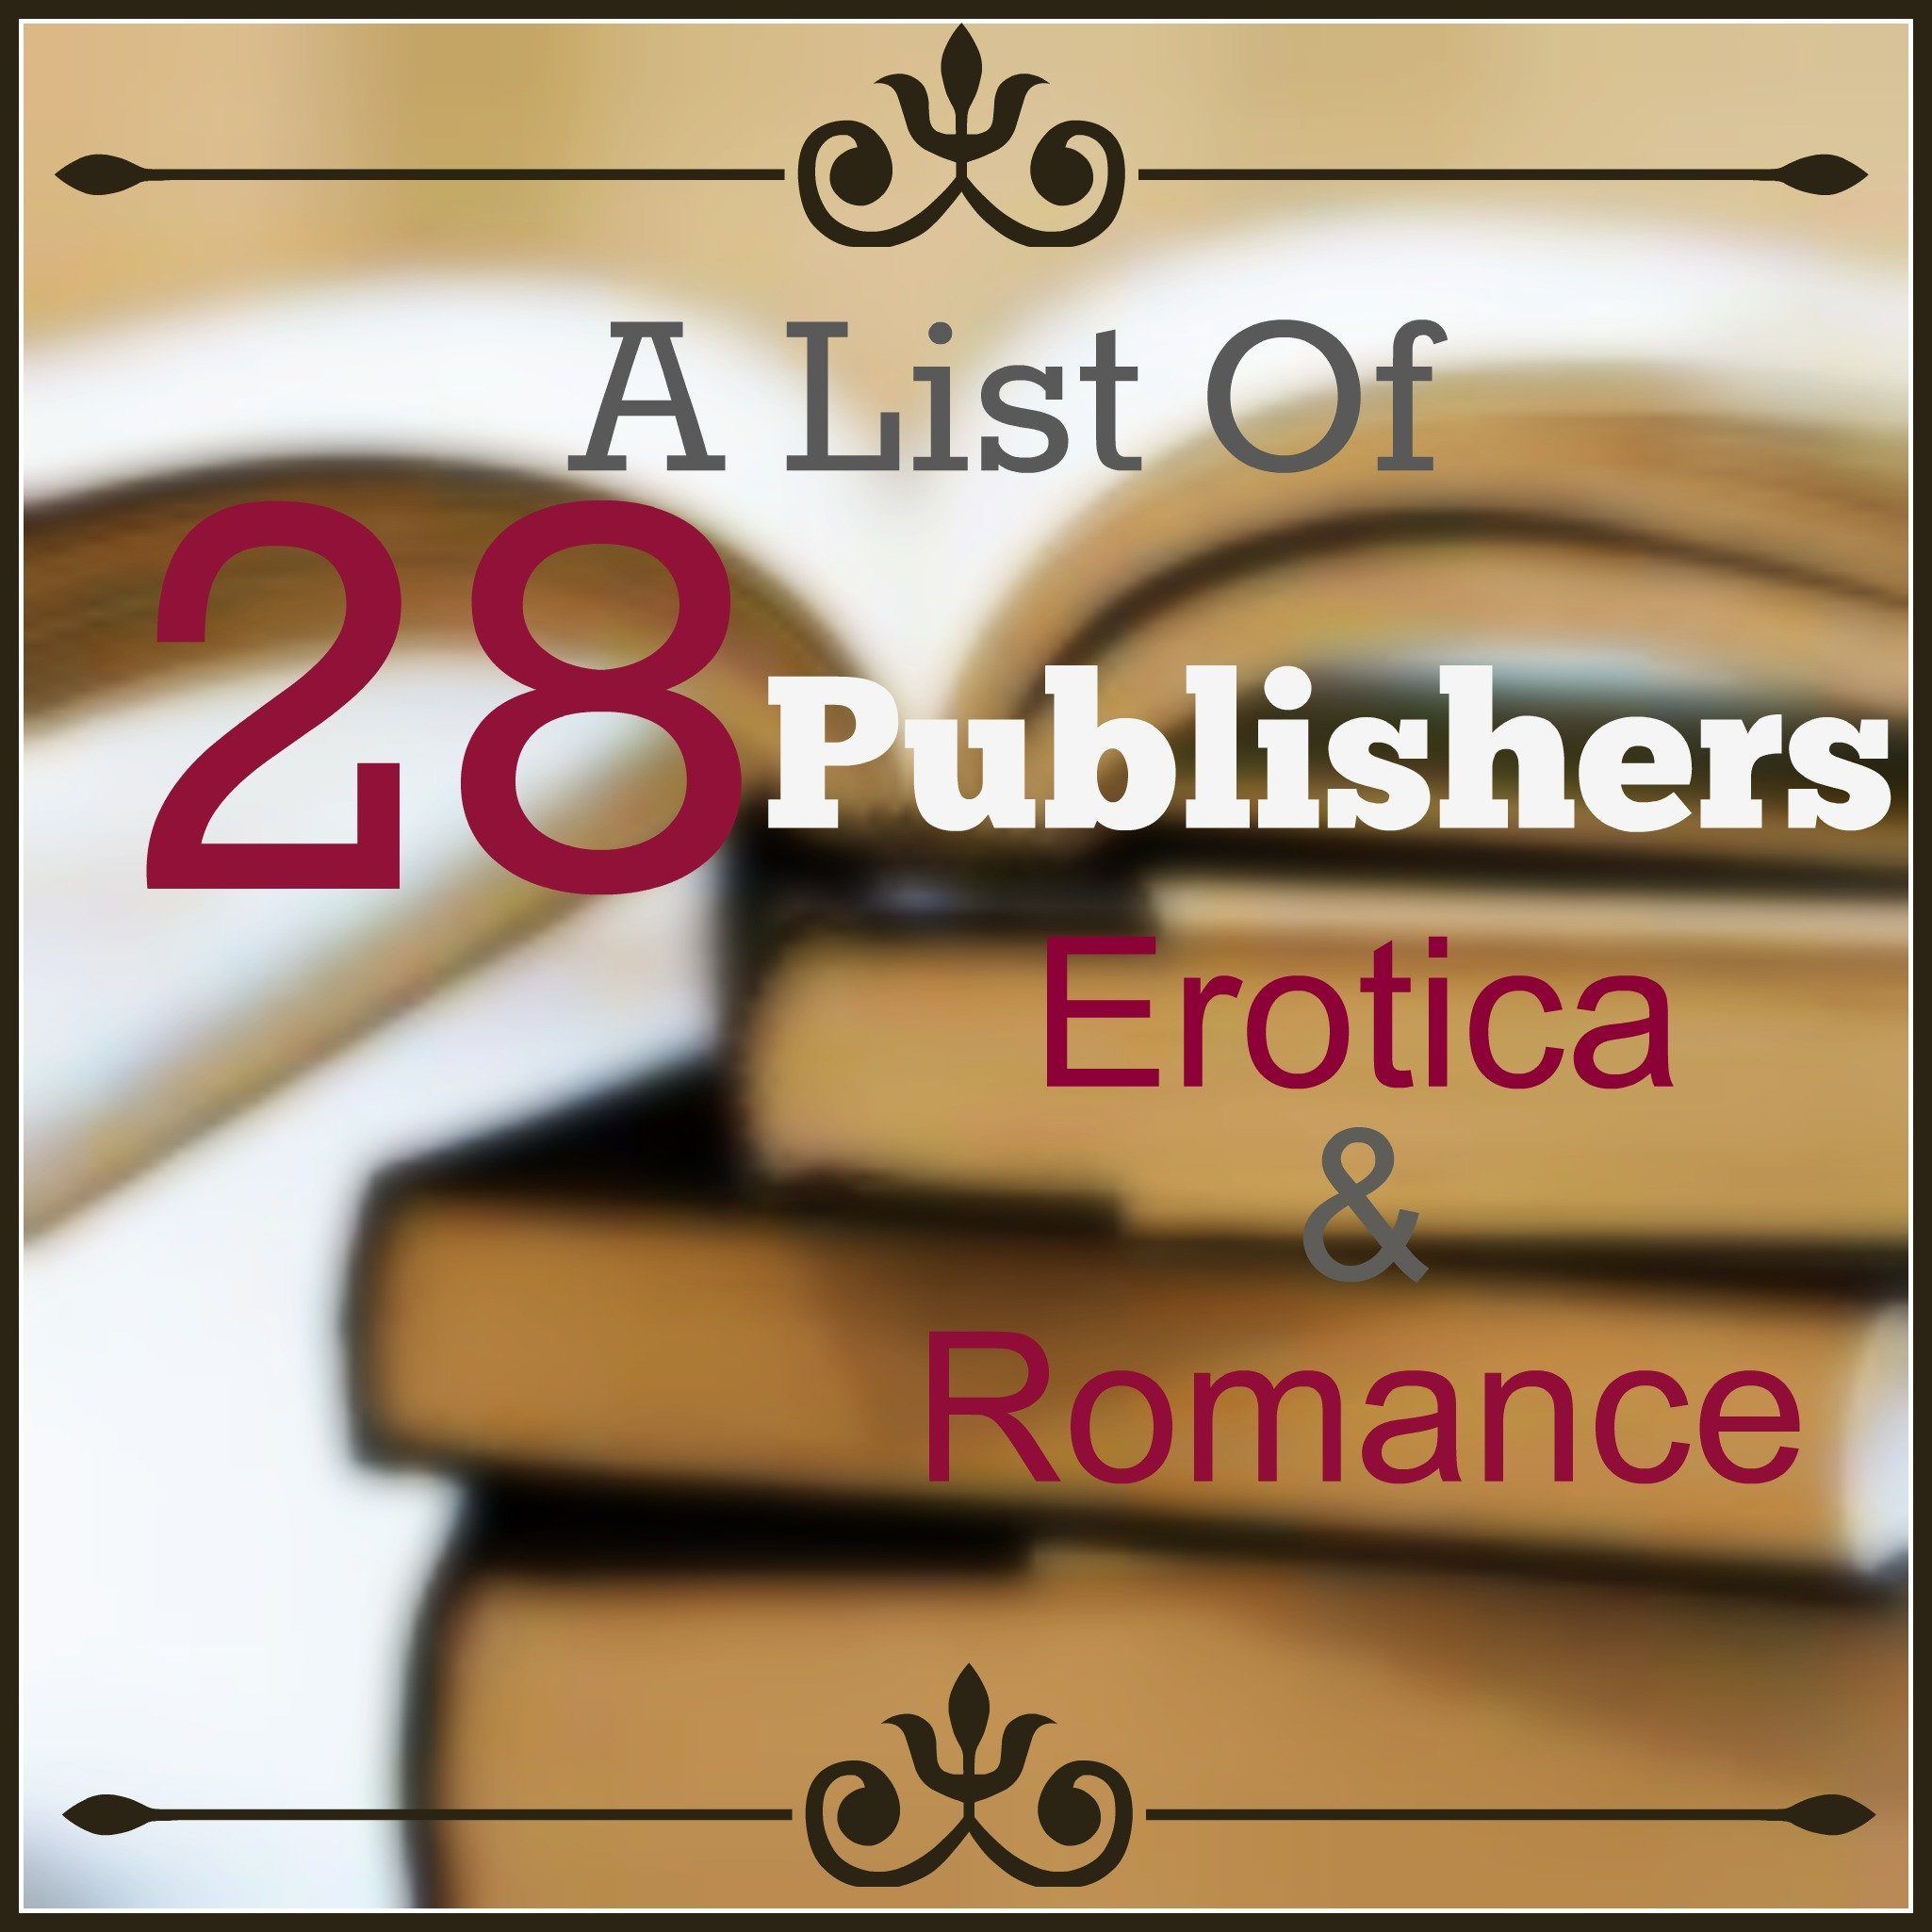 Erotic stories authors list